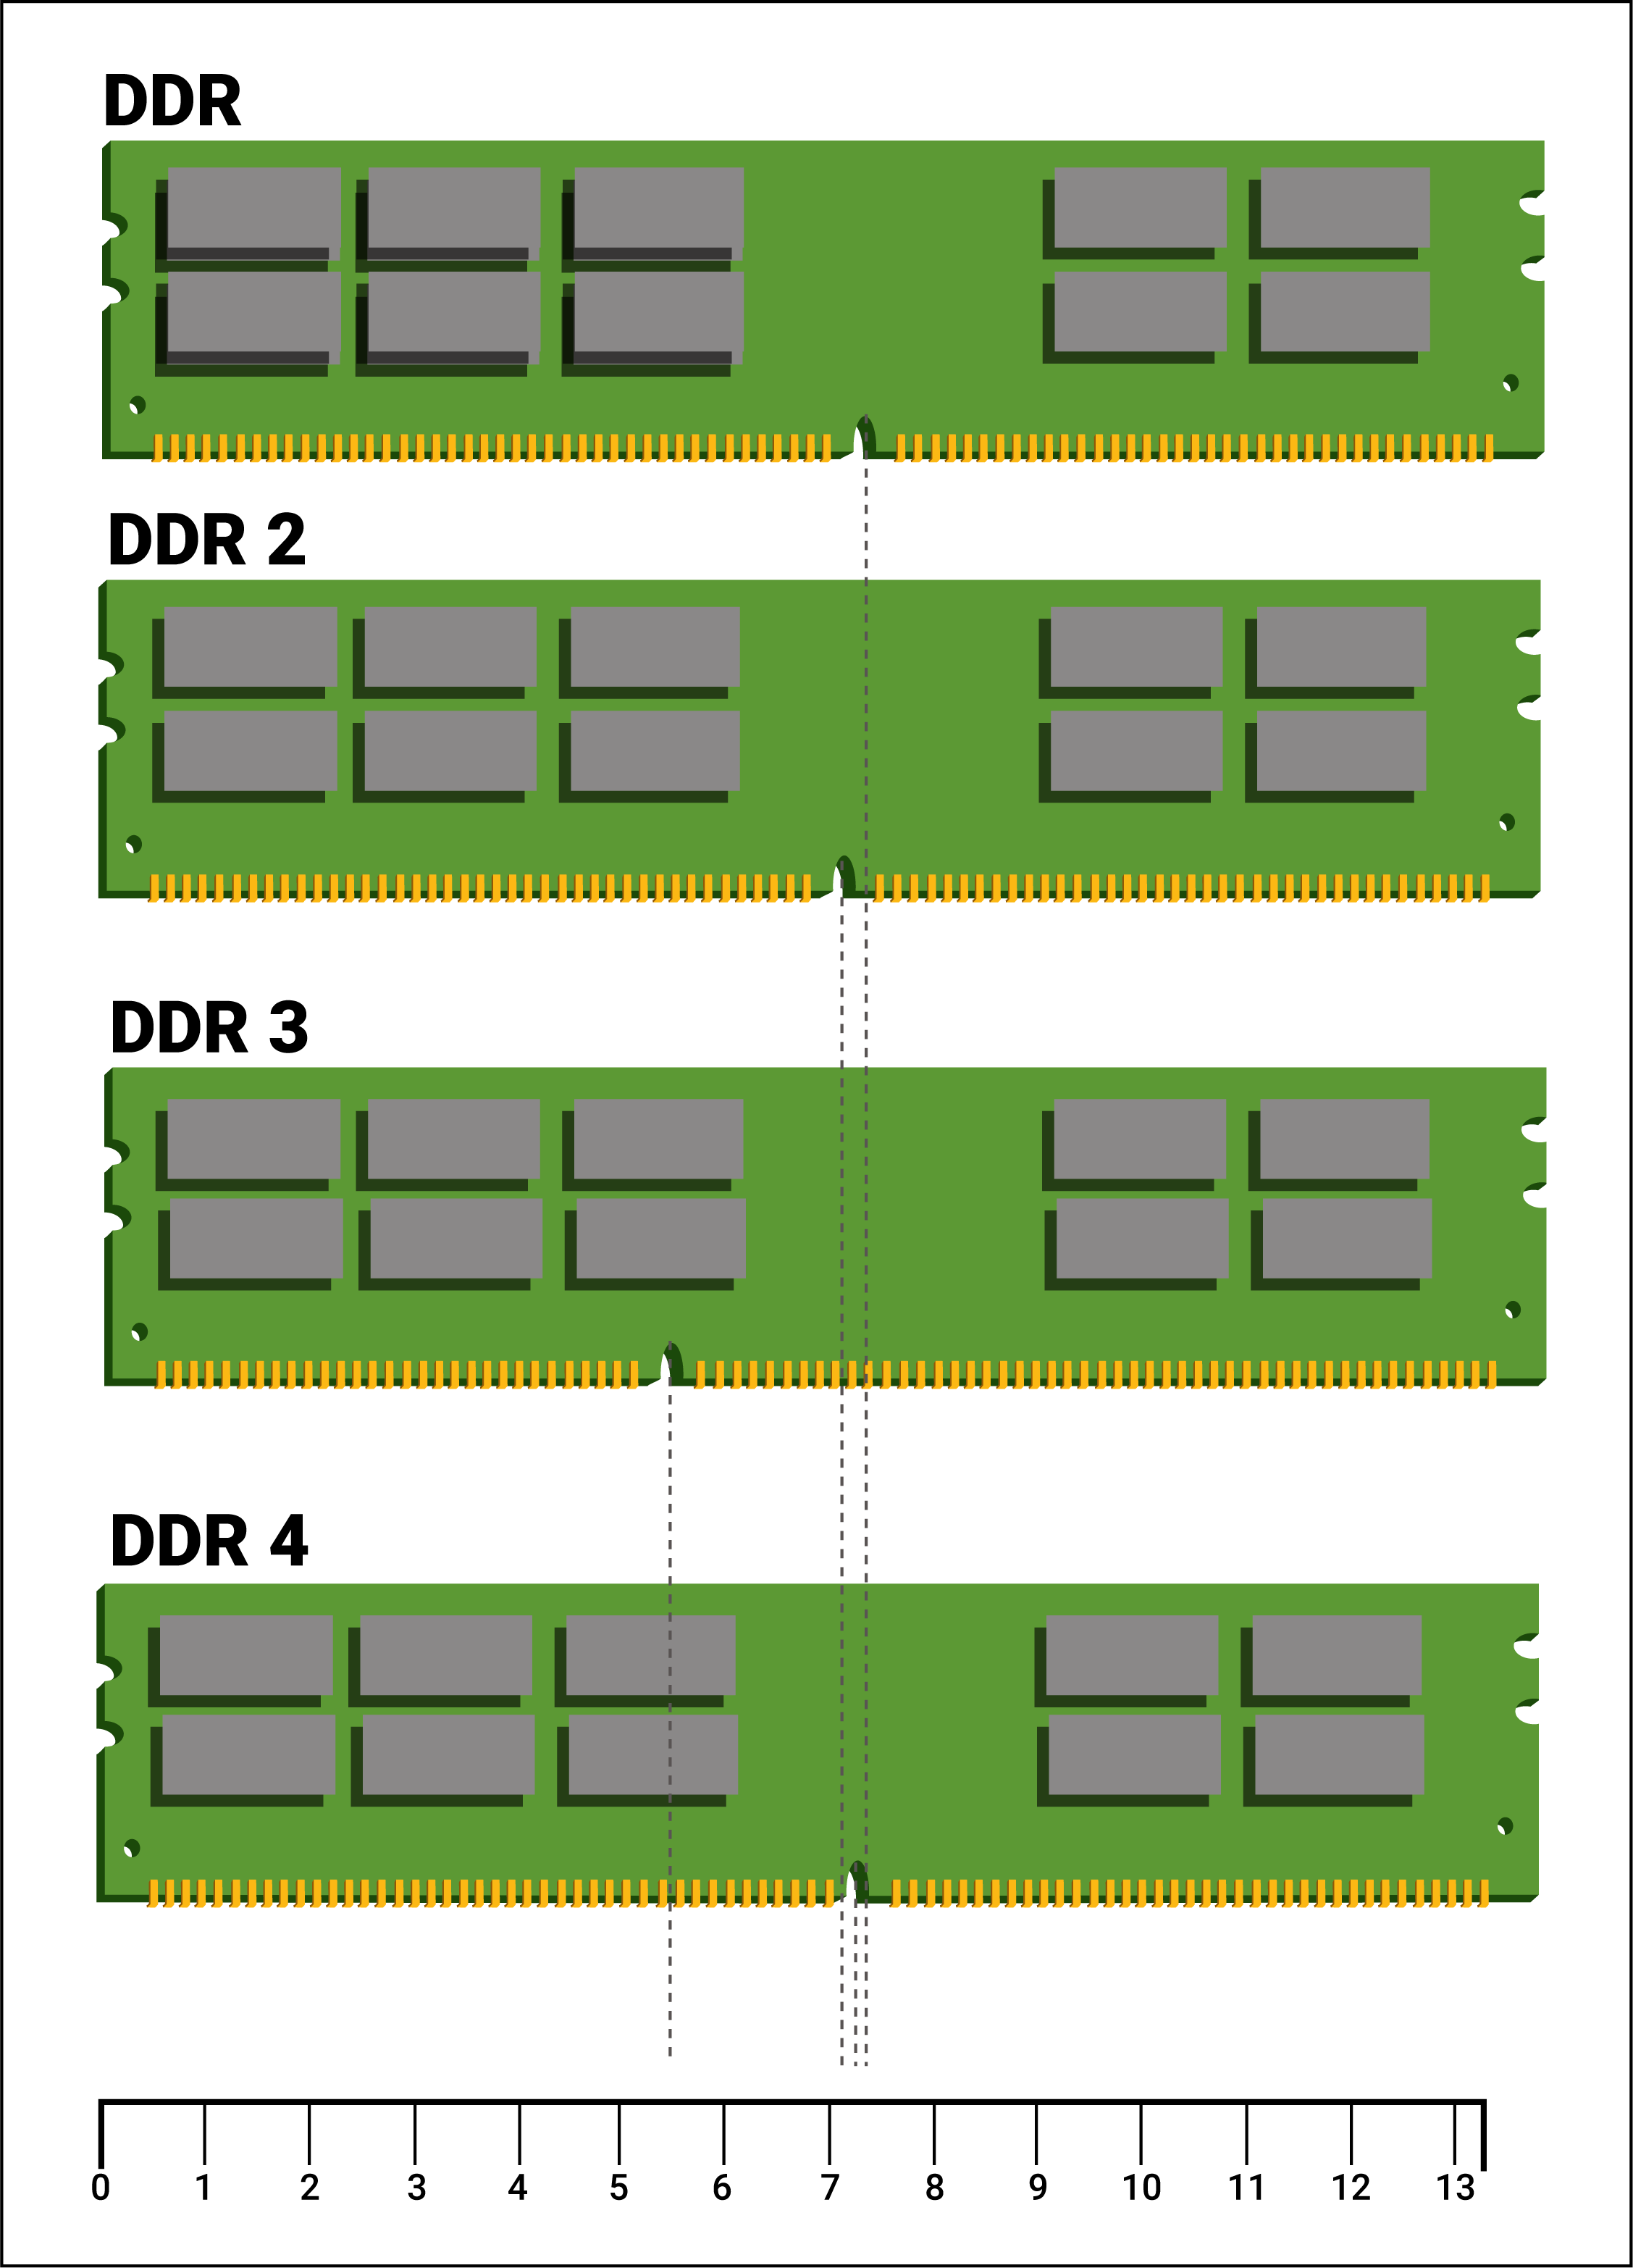 DDR memory modules slot